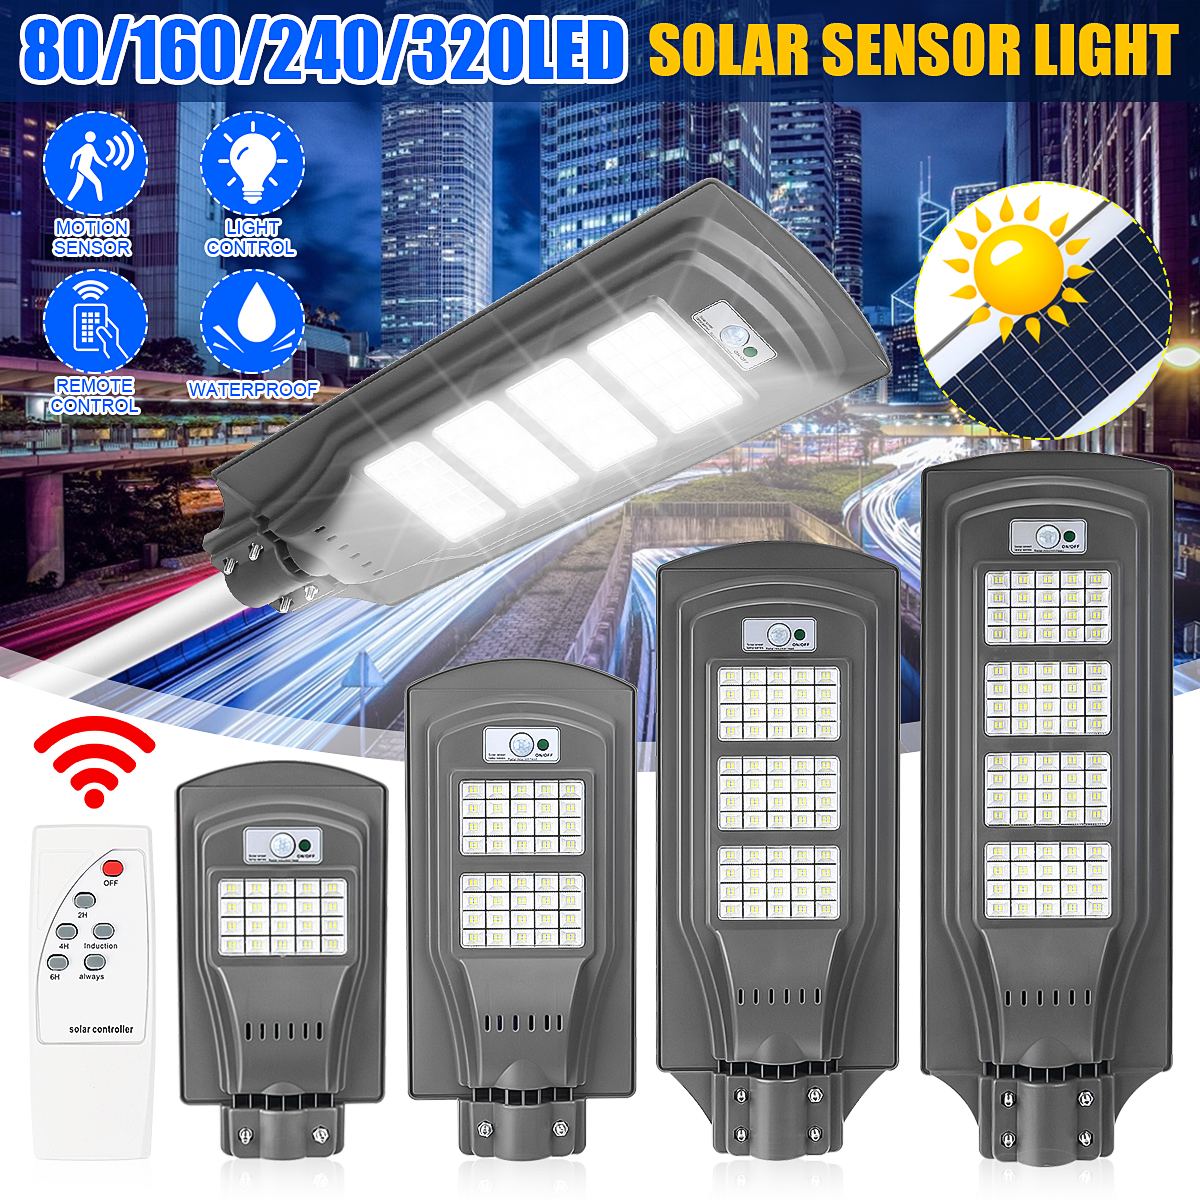 80160240320LED-Solar-Street-Light-PIR-Motion-Sensor-Wall-Lamp-WRemote-Waterproof-1719774-1